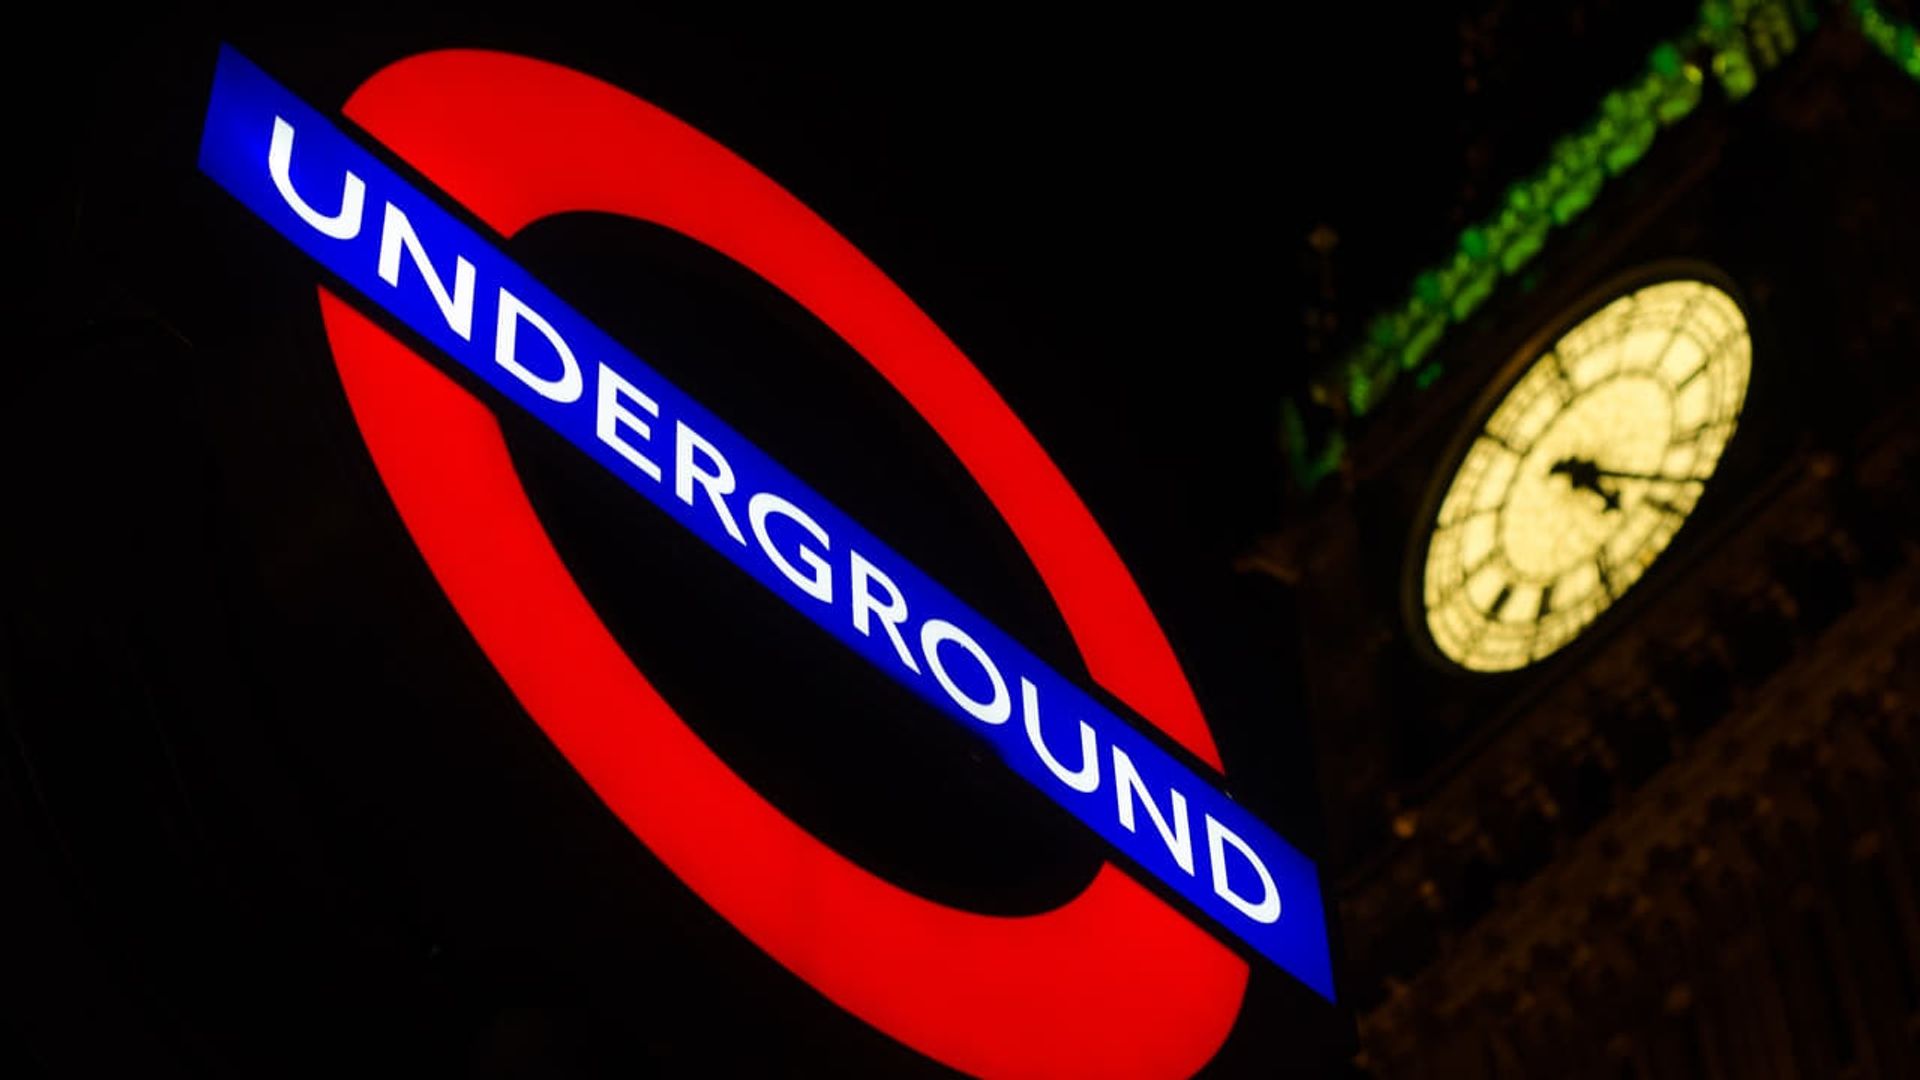 The Tube: Going Underground background